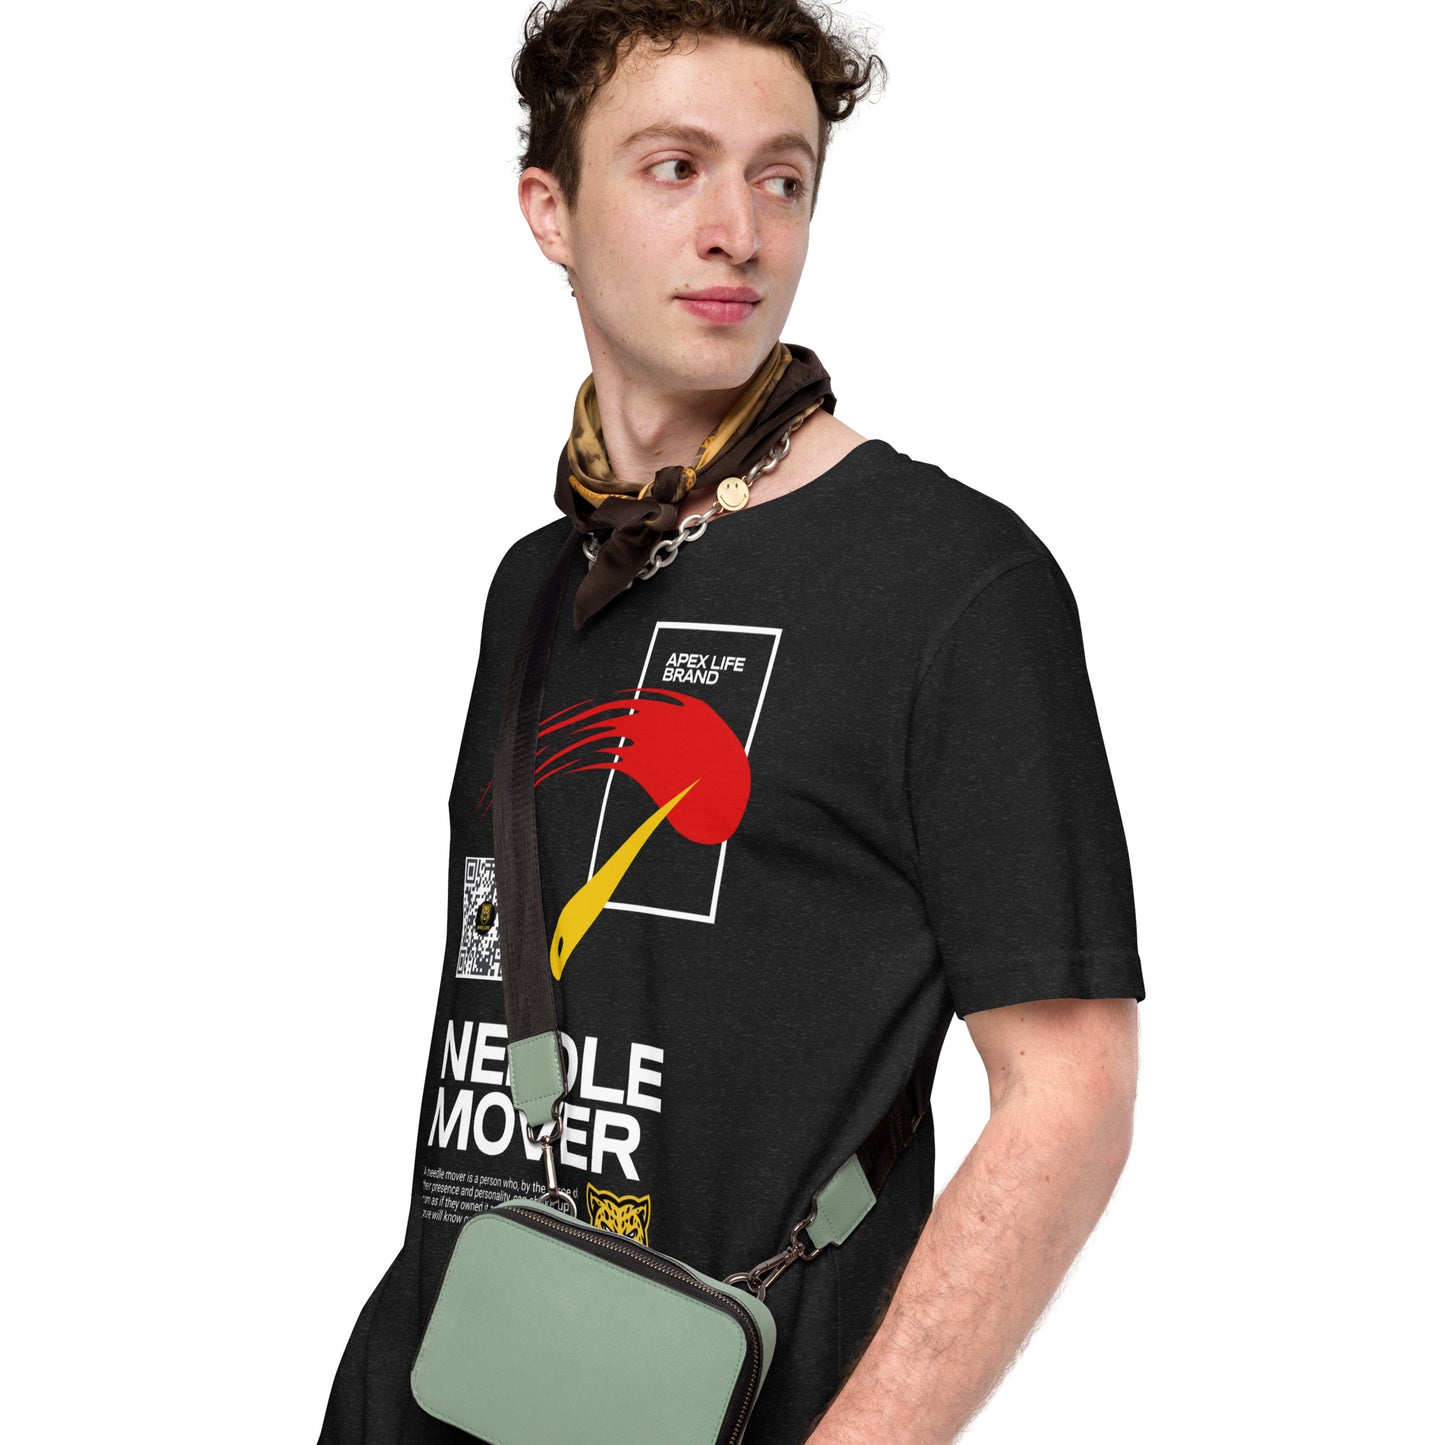 APXLFE Needle Mover t-shirt